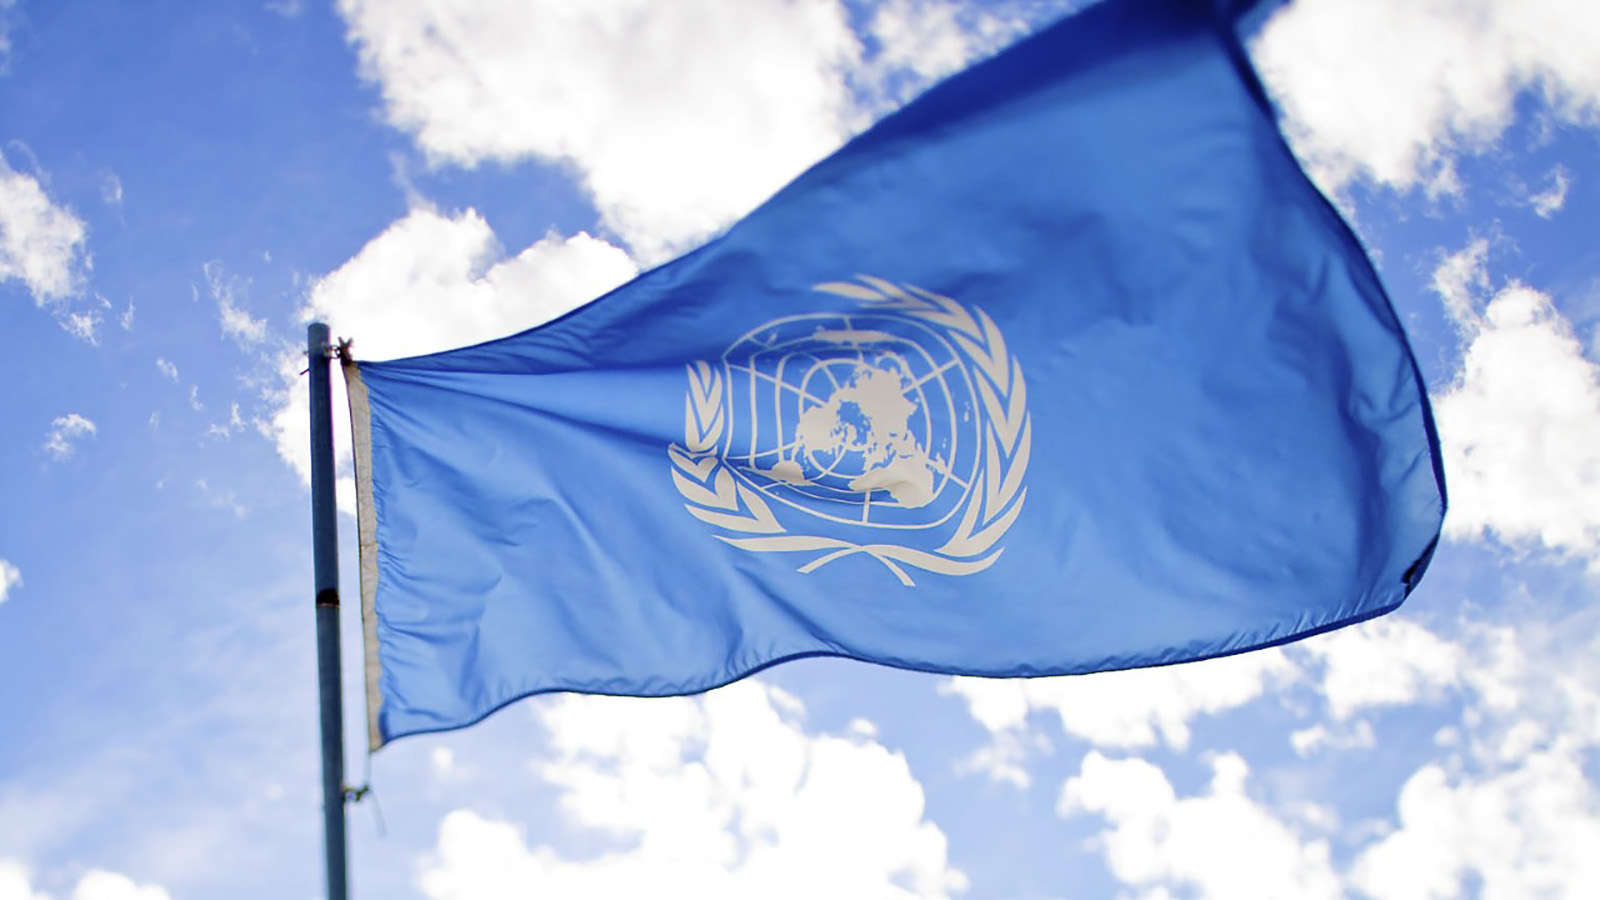 sanjitbakshi united nations flag flickr.com(CC BY 2.0)